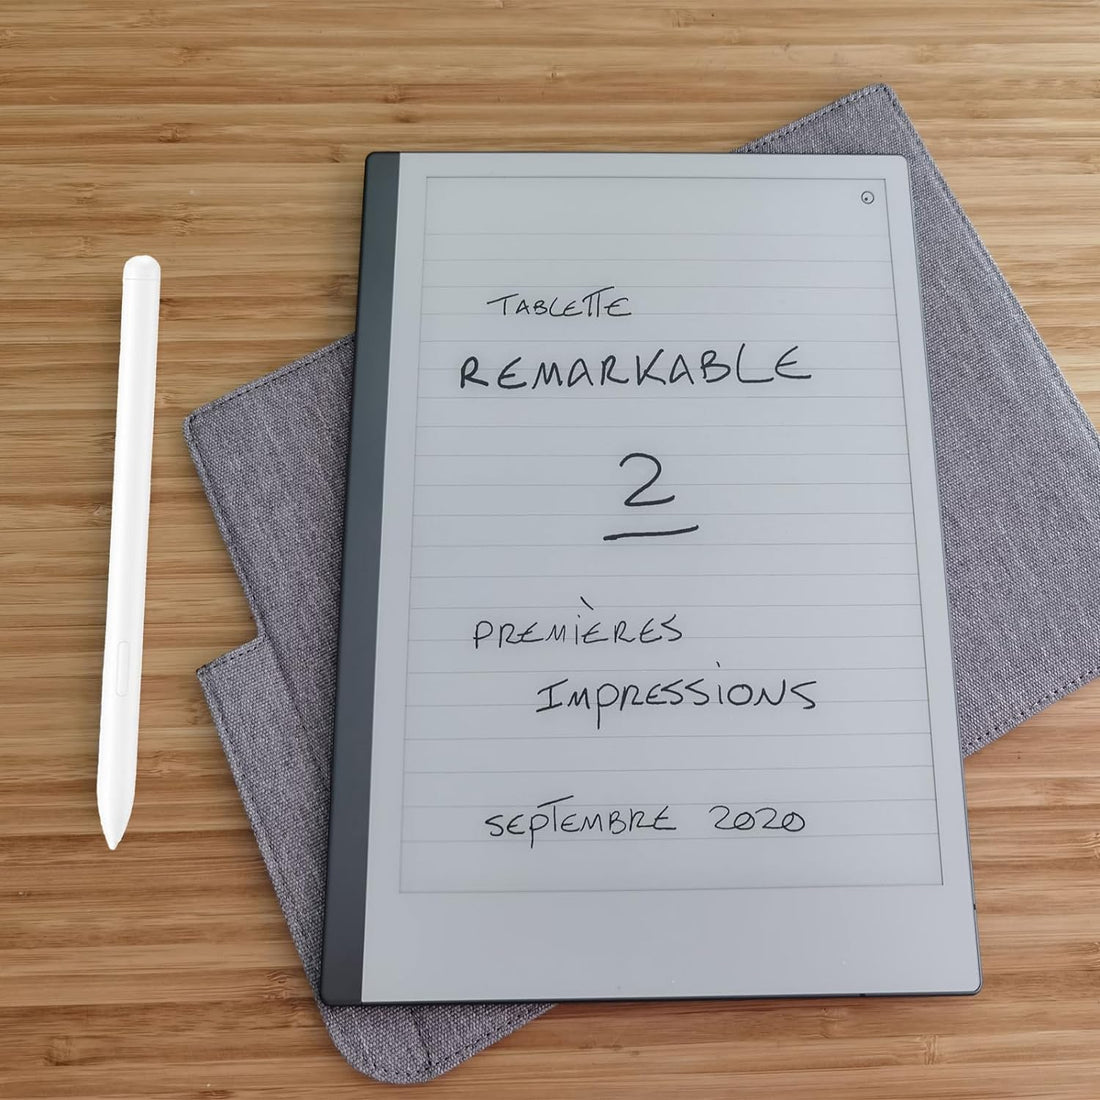 Marker Pen for Remarkable 2 Tablet Notebook, Stylus for Remarkable 2 Pen Replacement with Eraser Function, 4096 Pressure Levels, Pen for Remarkable 2 Digital Pen + 5 Tips/Nibs(Beige)